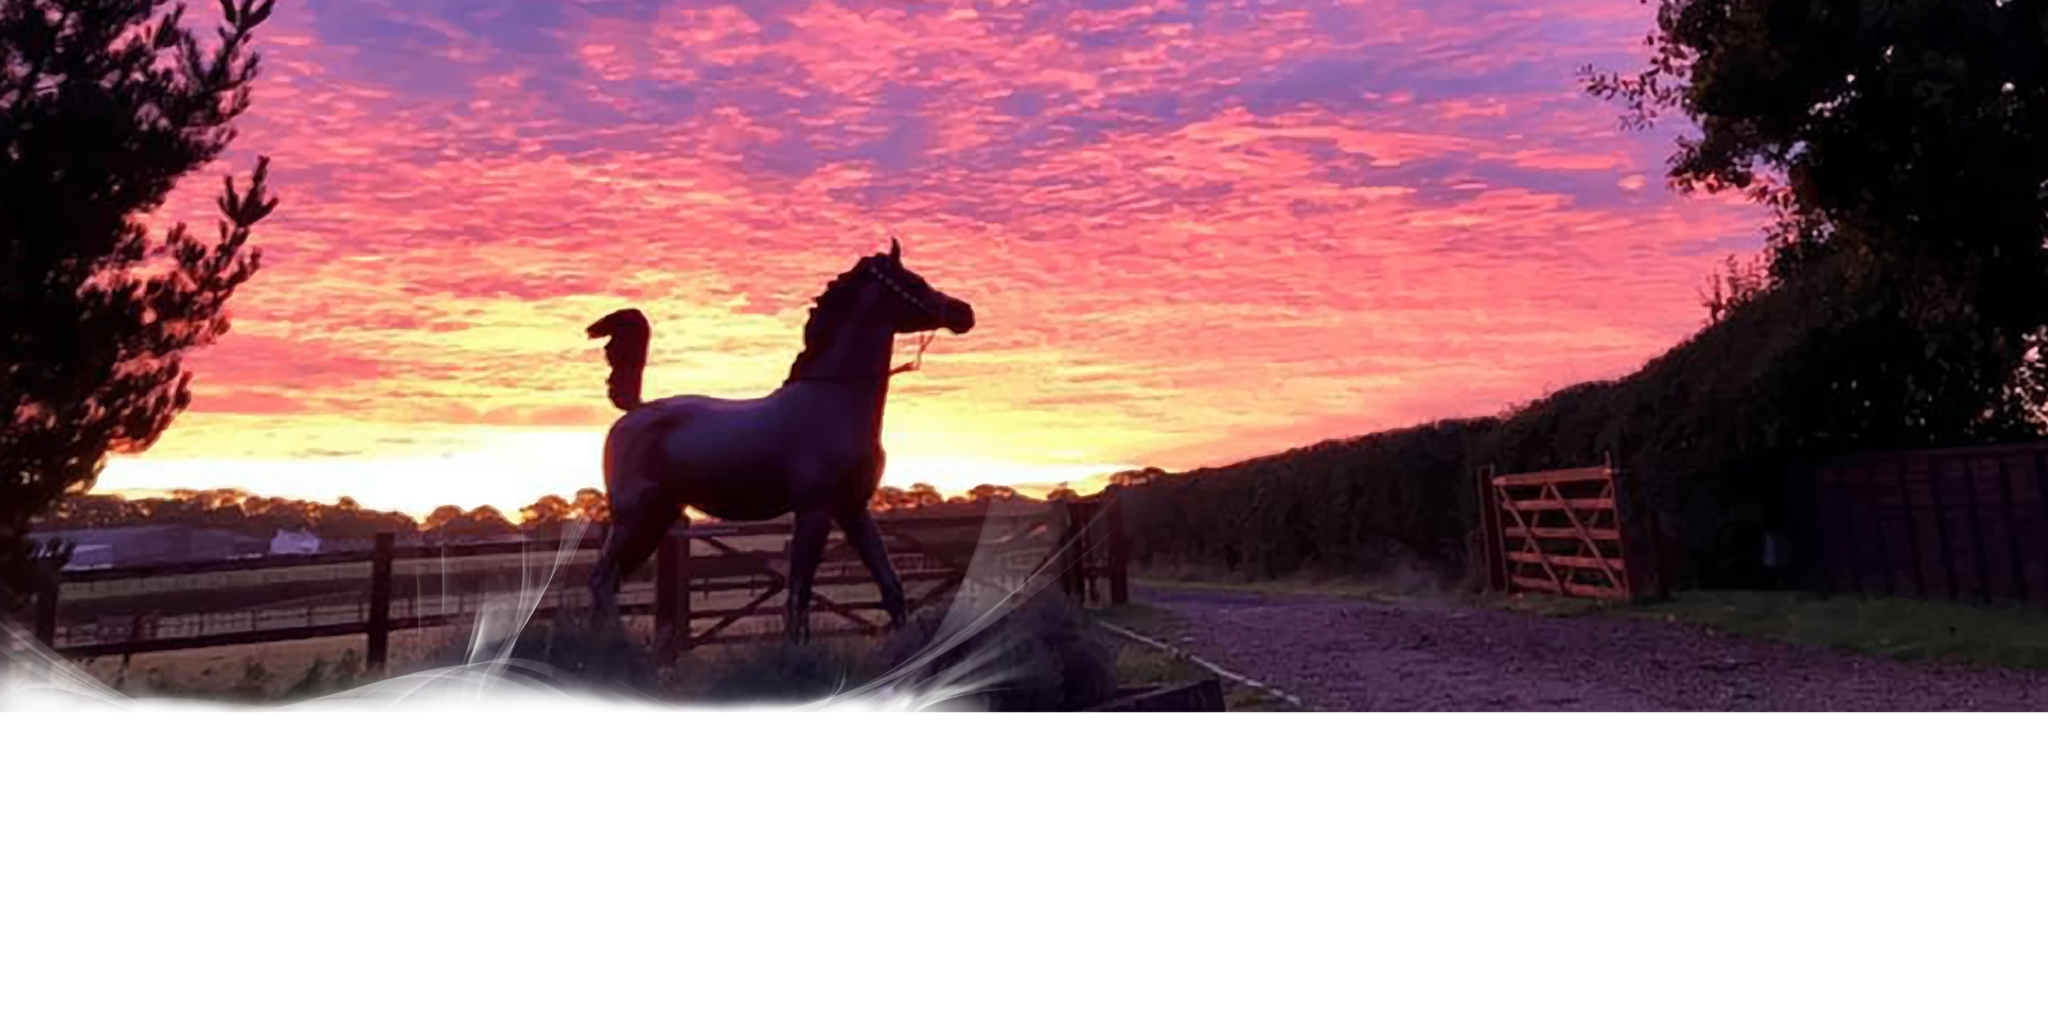 bronze statue of arabian foal in the sunset